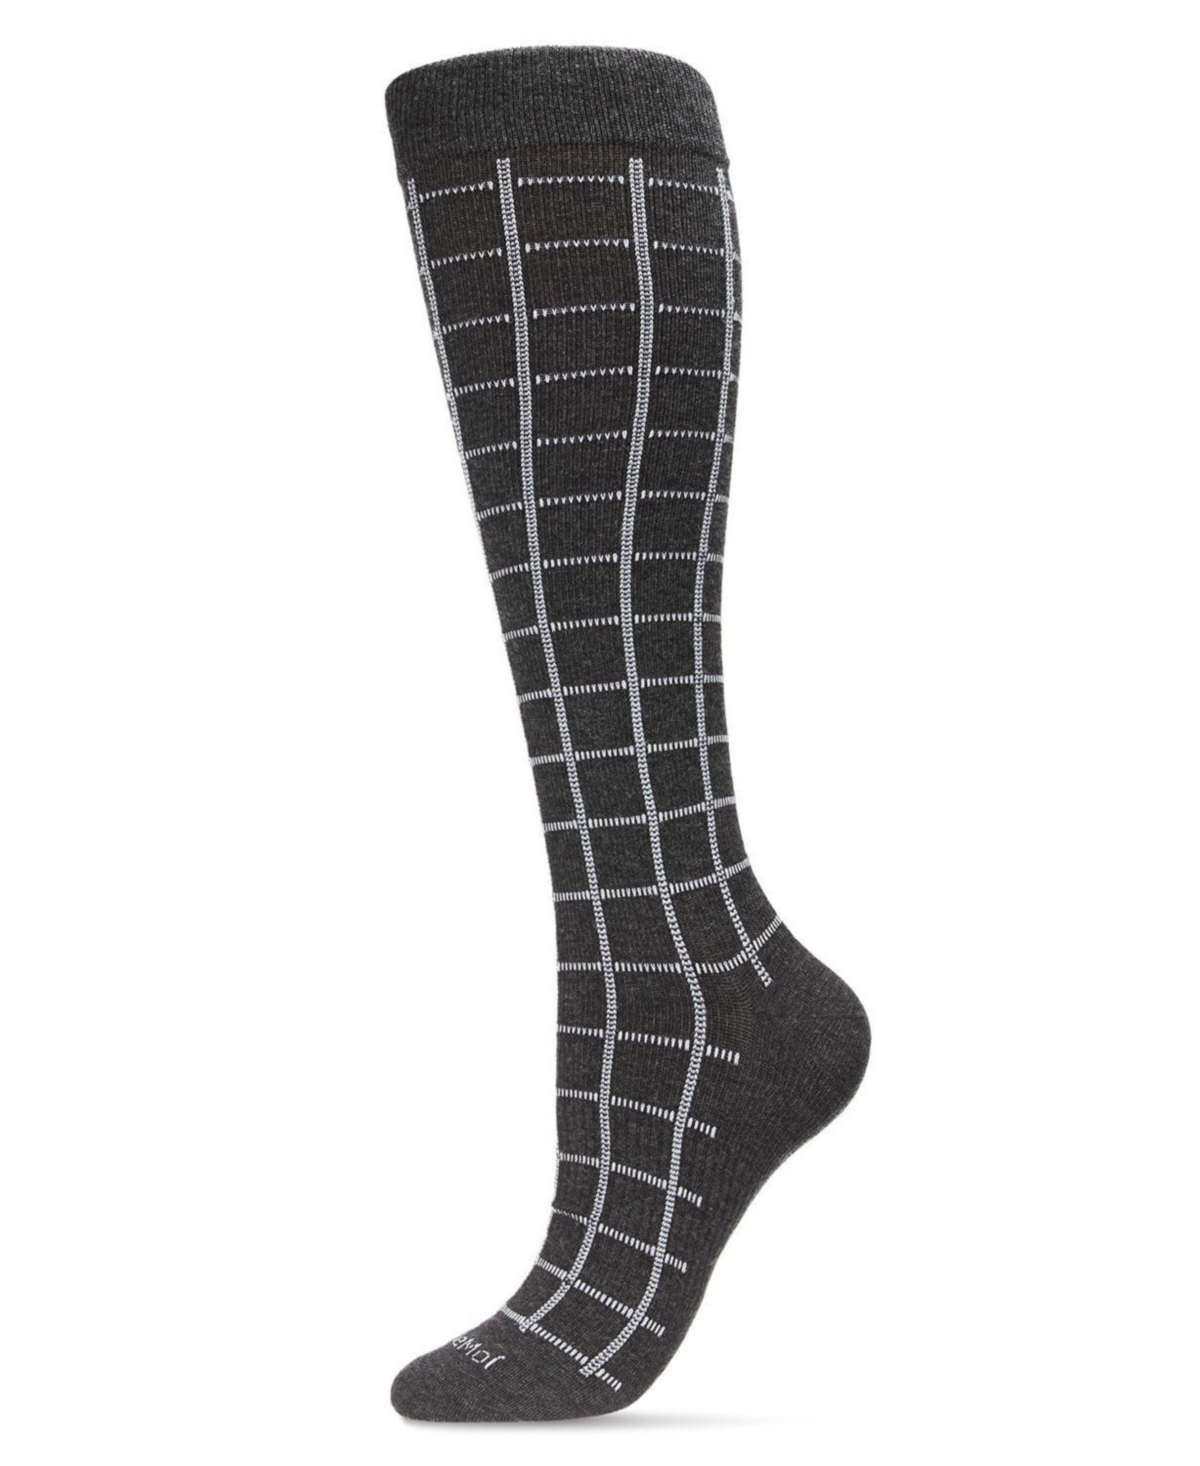 Men's Window Pane Cotton Compression Socks - Dark Gray Heather